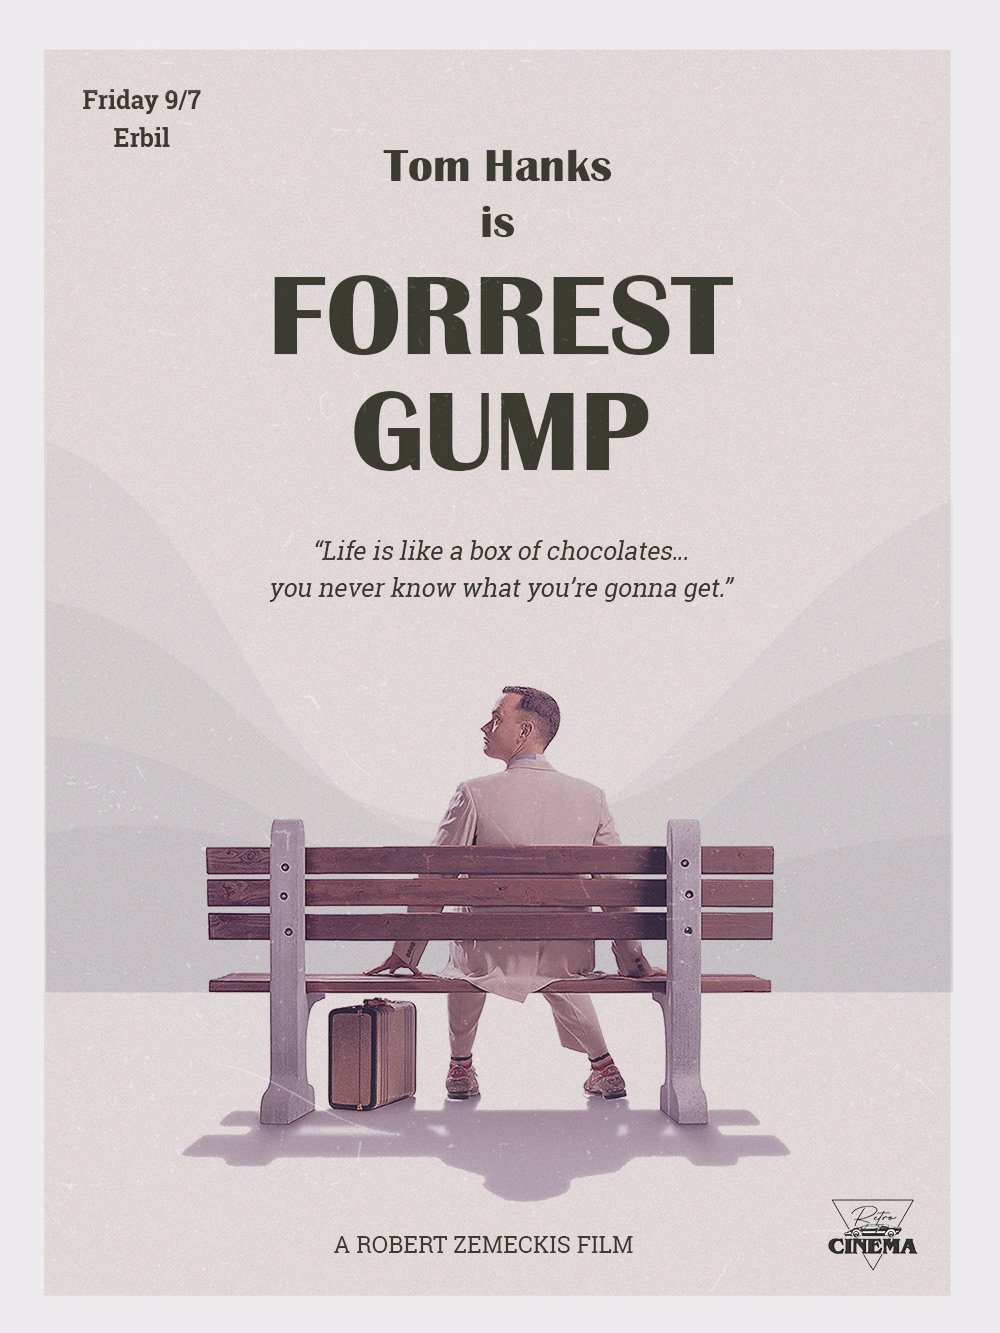 Cinema forrest gump movie movie poster Poster Design tom hanks